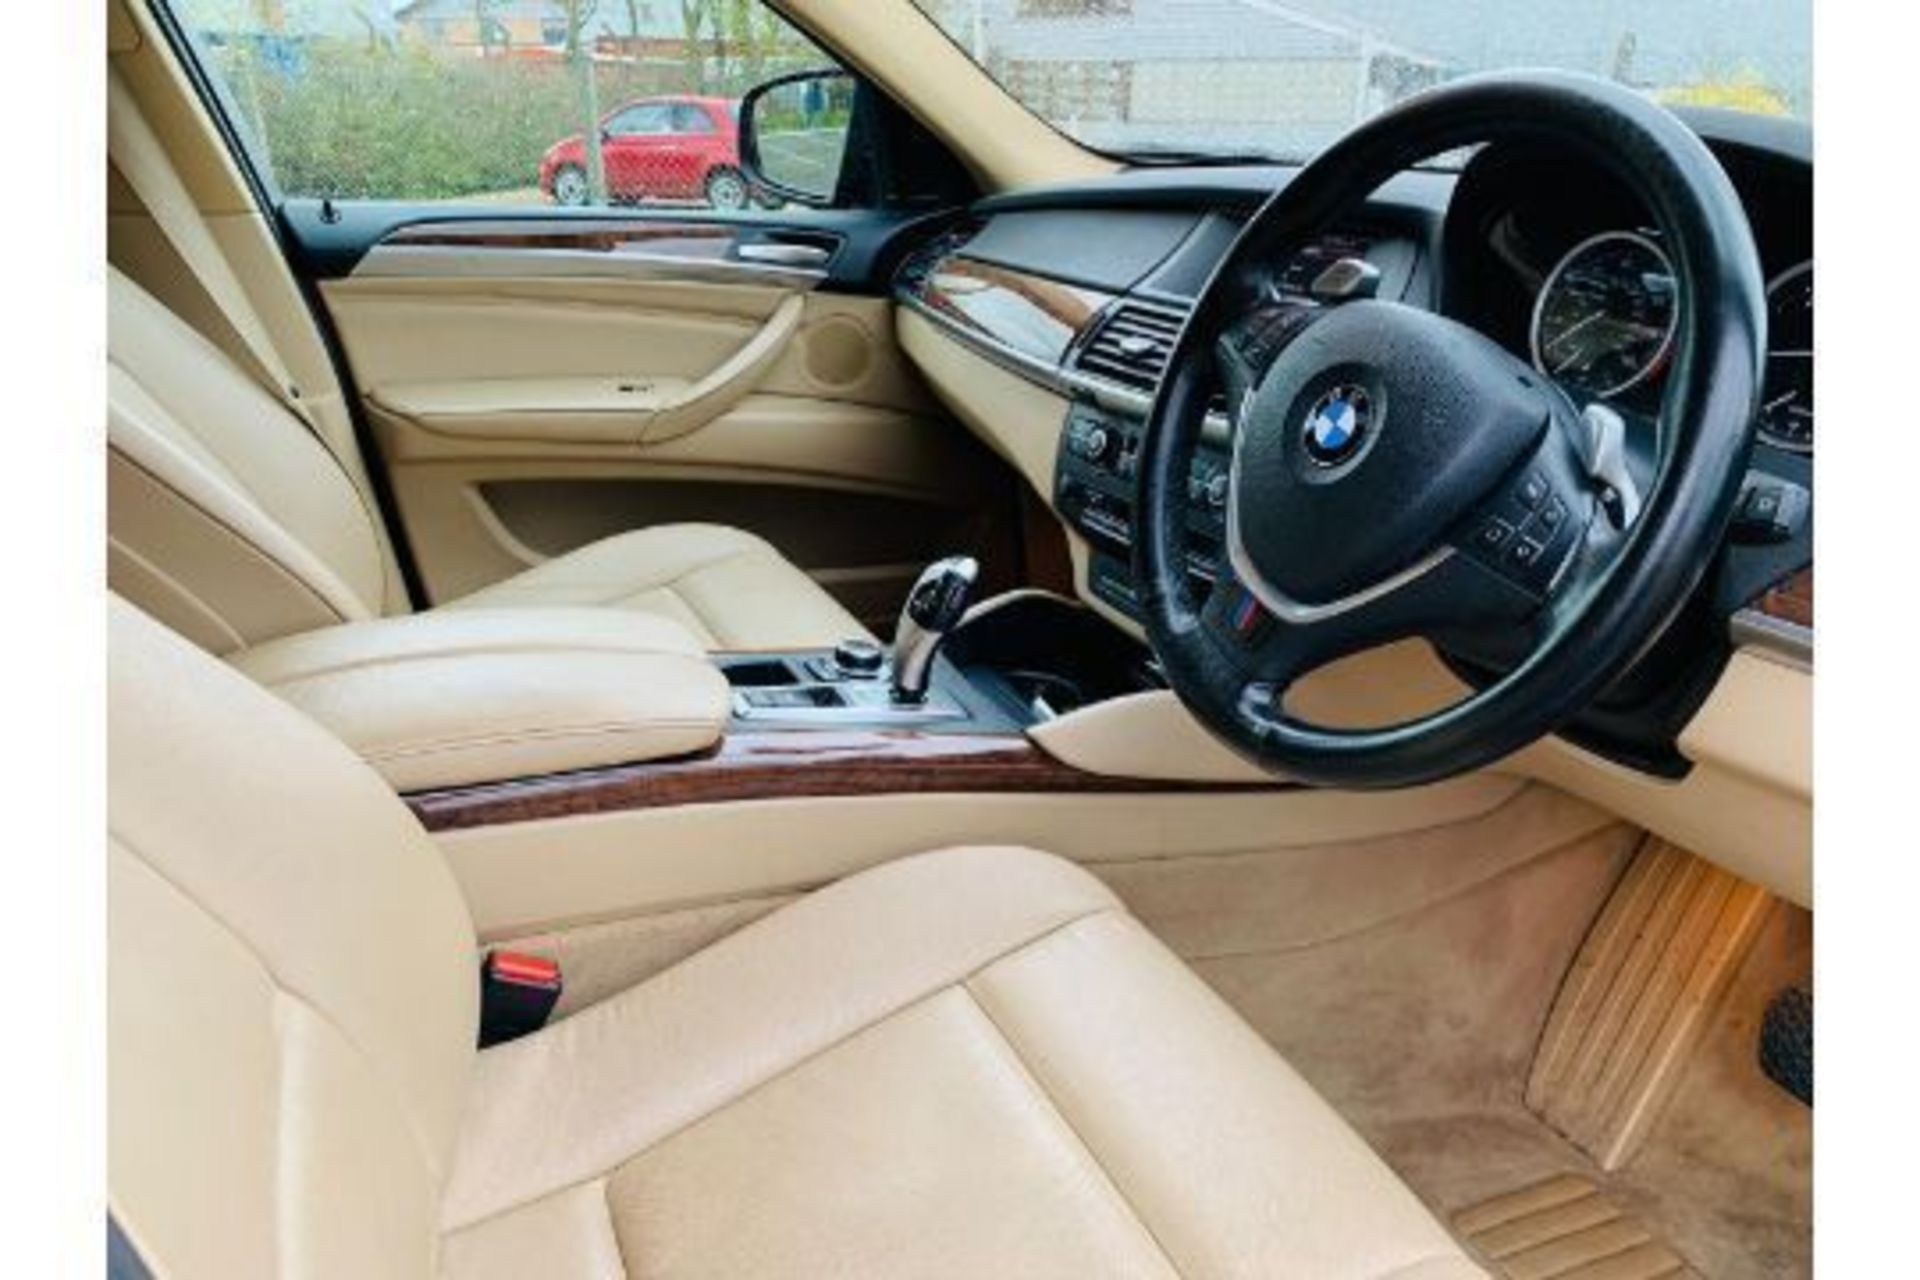 (RESERVE MET) BMW X6 xDrive 30d Auto - 2014 Reg - Leather Interior -Parking Sensors - Reversing Cam - Image 12 of 29